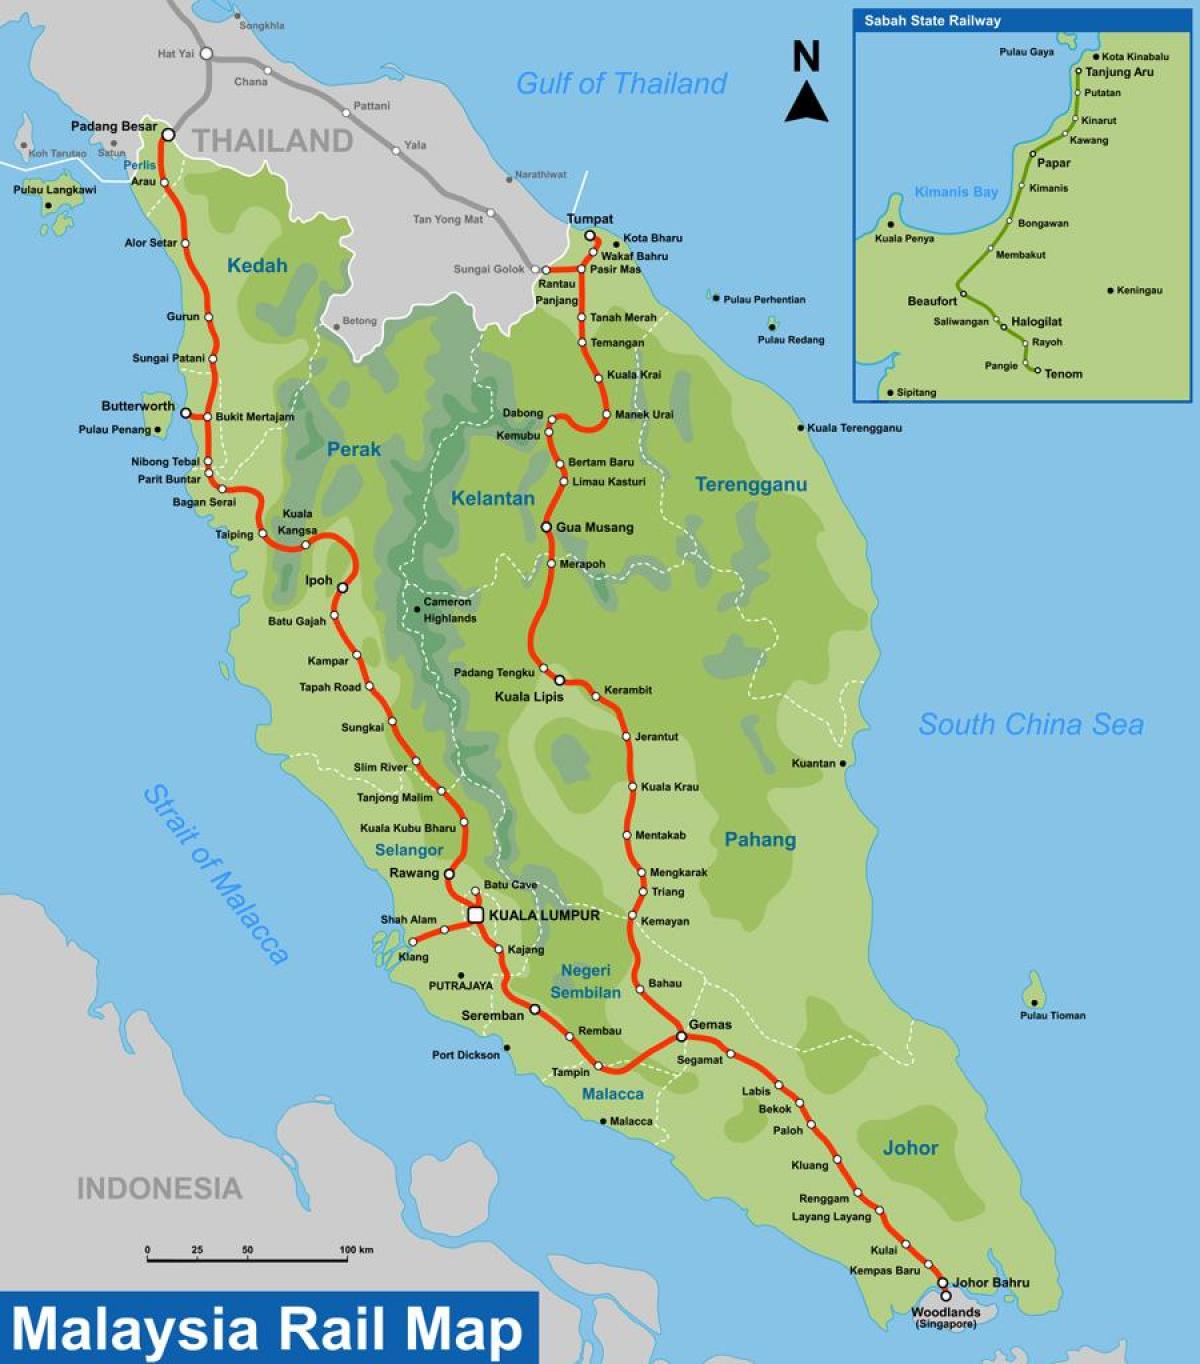 Ktm train malaysia map - Ktm station map malaysia (South-Eastern Asia